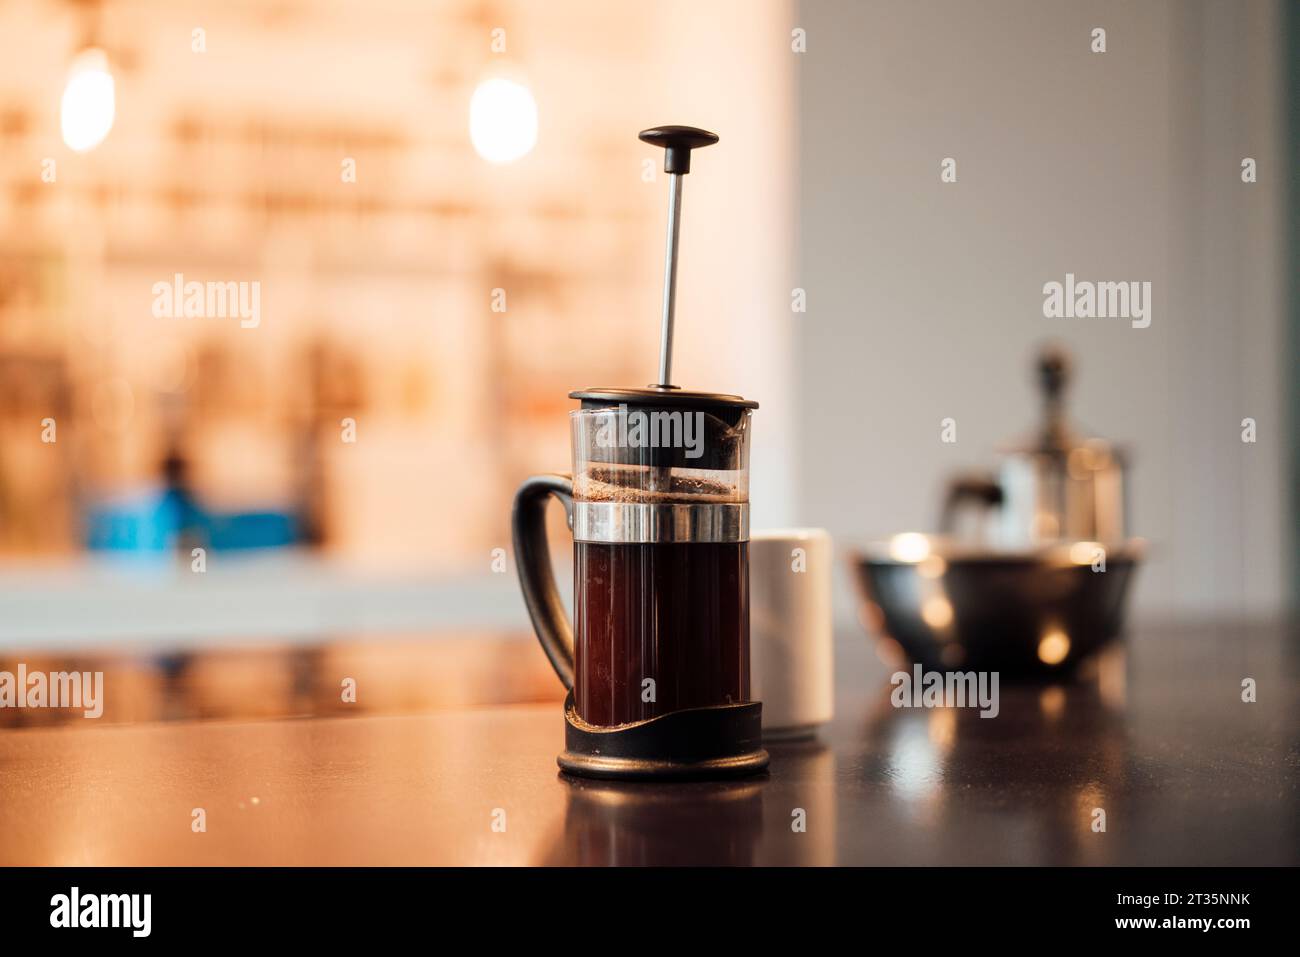 Cafetera francesa fotografías e imágenes de alta resolución - Alamy